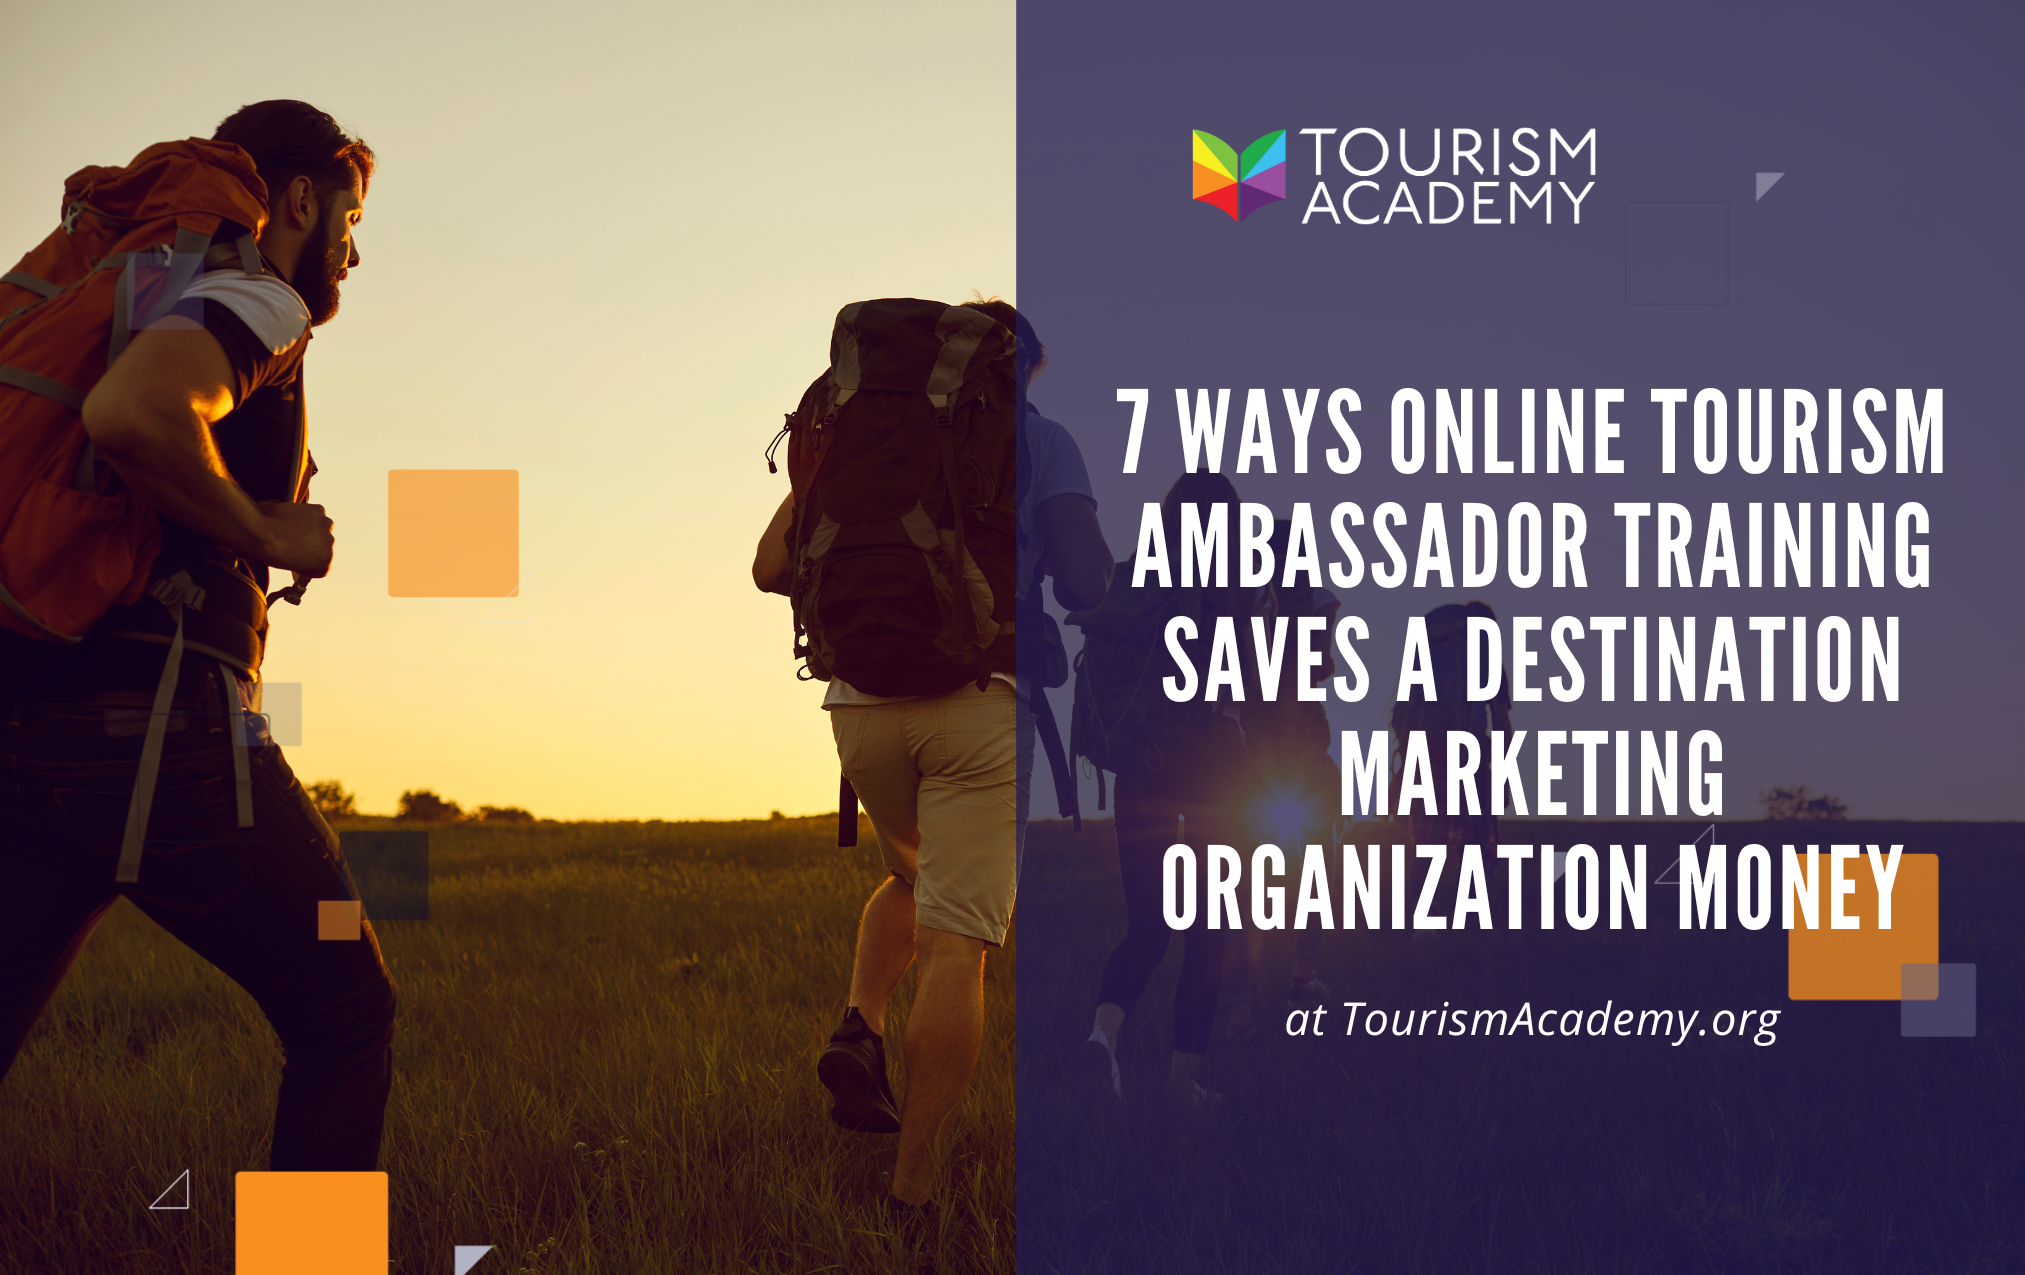 cost-saving benefits of online tourism ambassador training for destination marketing organizations